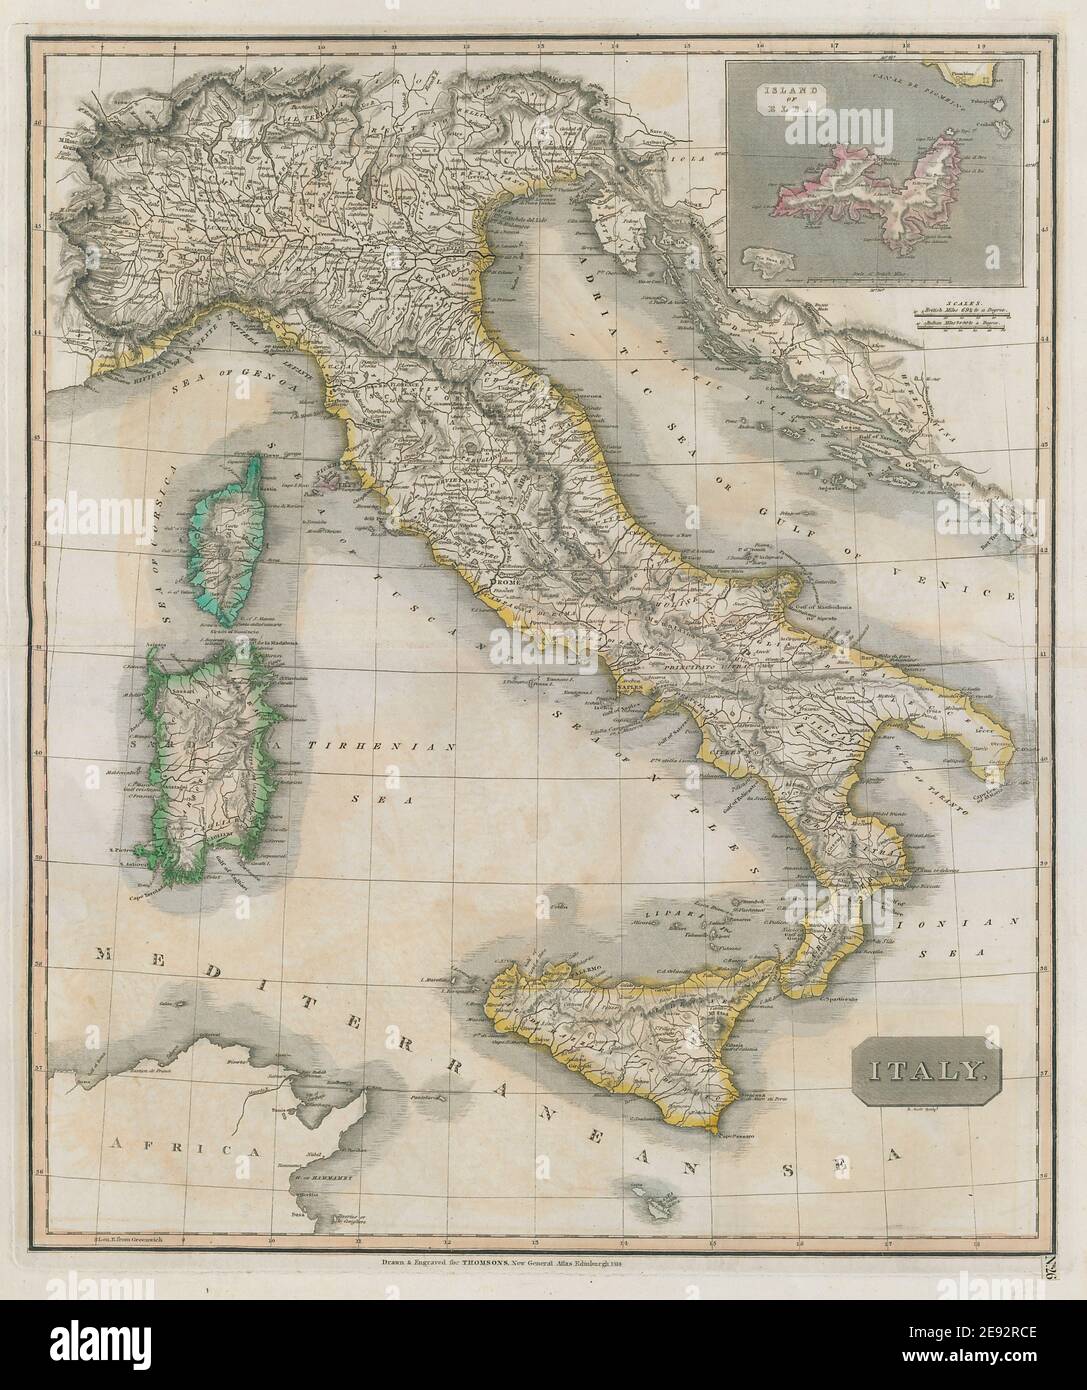 Italien von John Thomson. Insel Elba. Sizilien Sardinien Korsika 1817 alte Karte Stockfoto